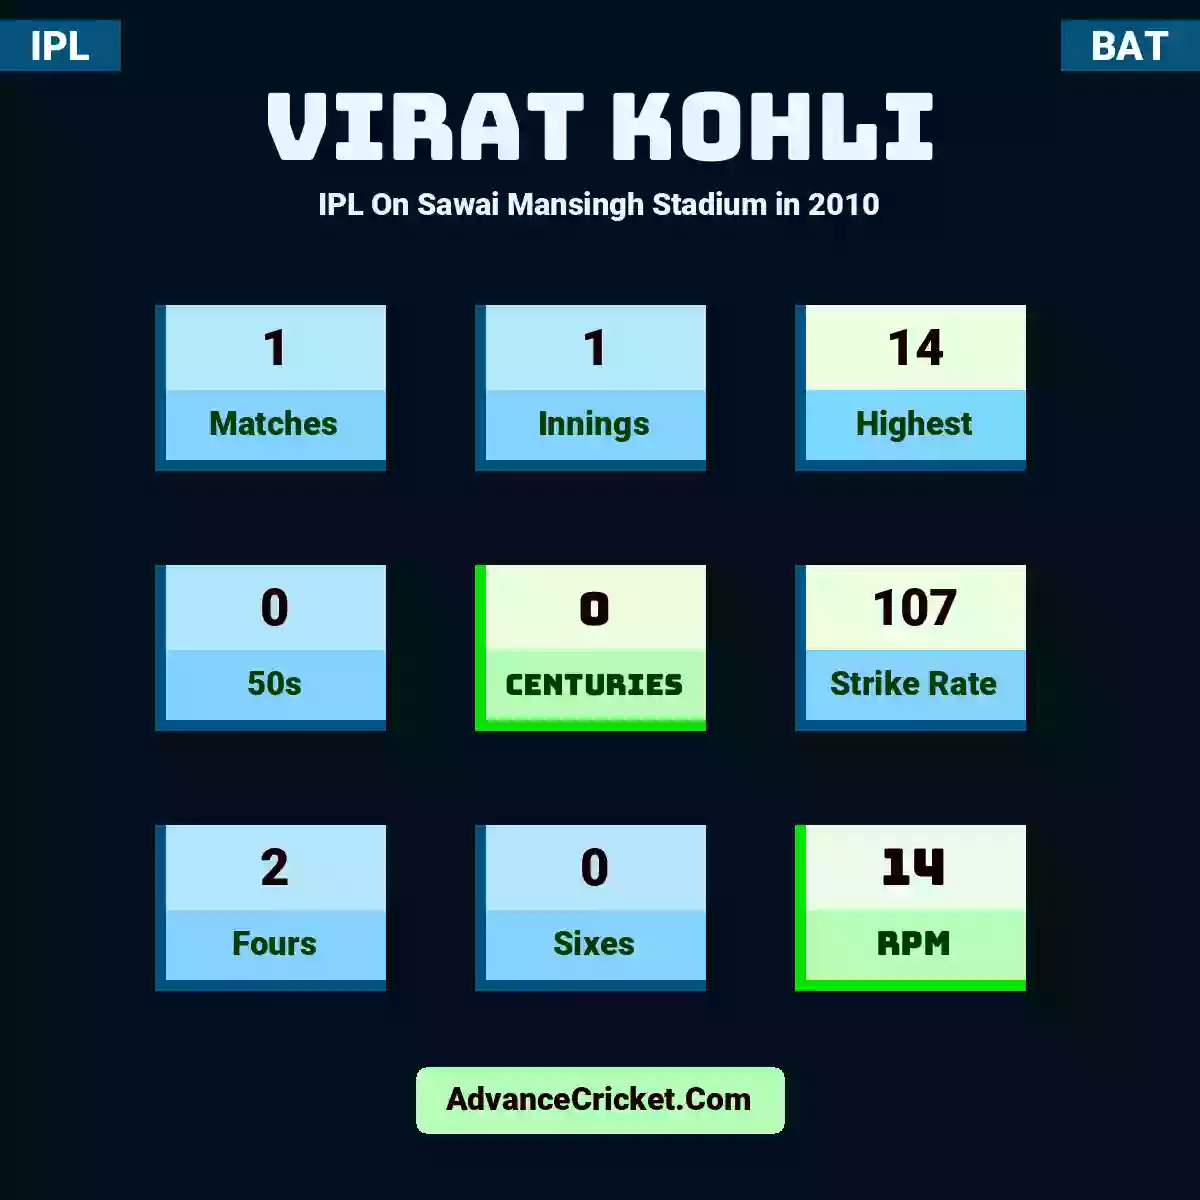 Virat Kohli IPL  On Sawai Mansingh Stadium in 2010, Virat Kohli played 1 matches, scored 14 runs as highest, 0 half-centuries, and 0 centuries, with a strike rate of 107. V.Kohli hit 2 fours and 0 sixes, with an RPM of 14.